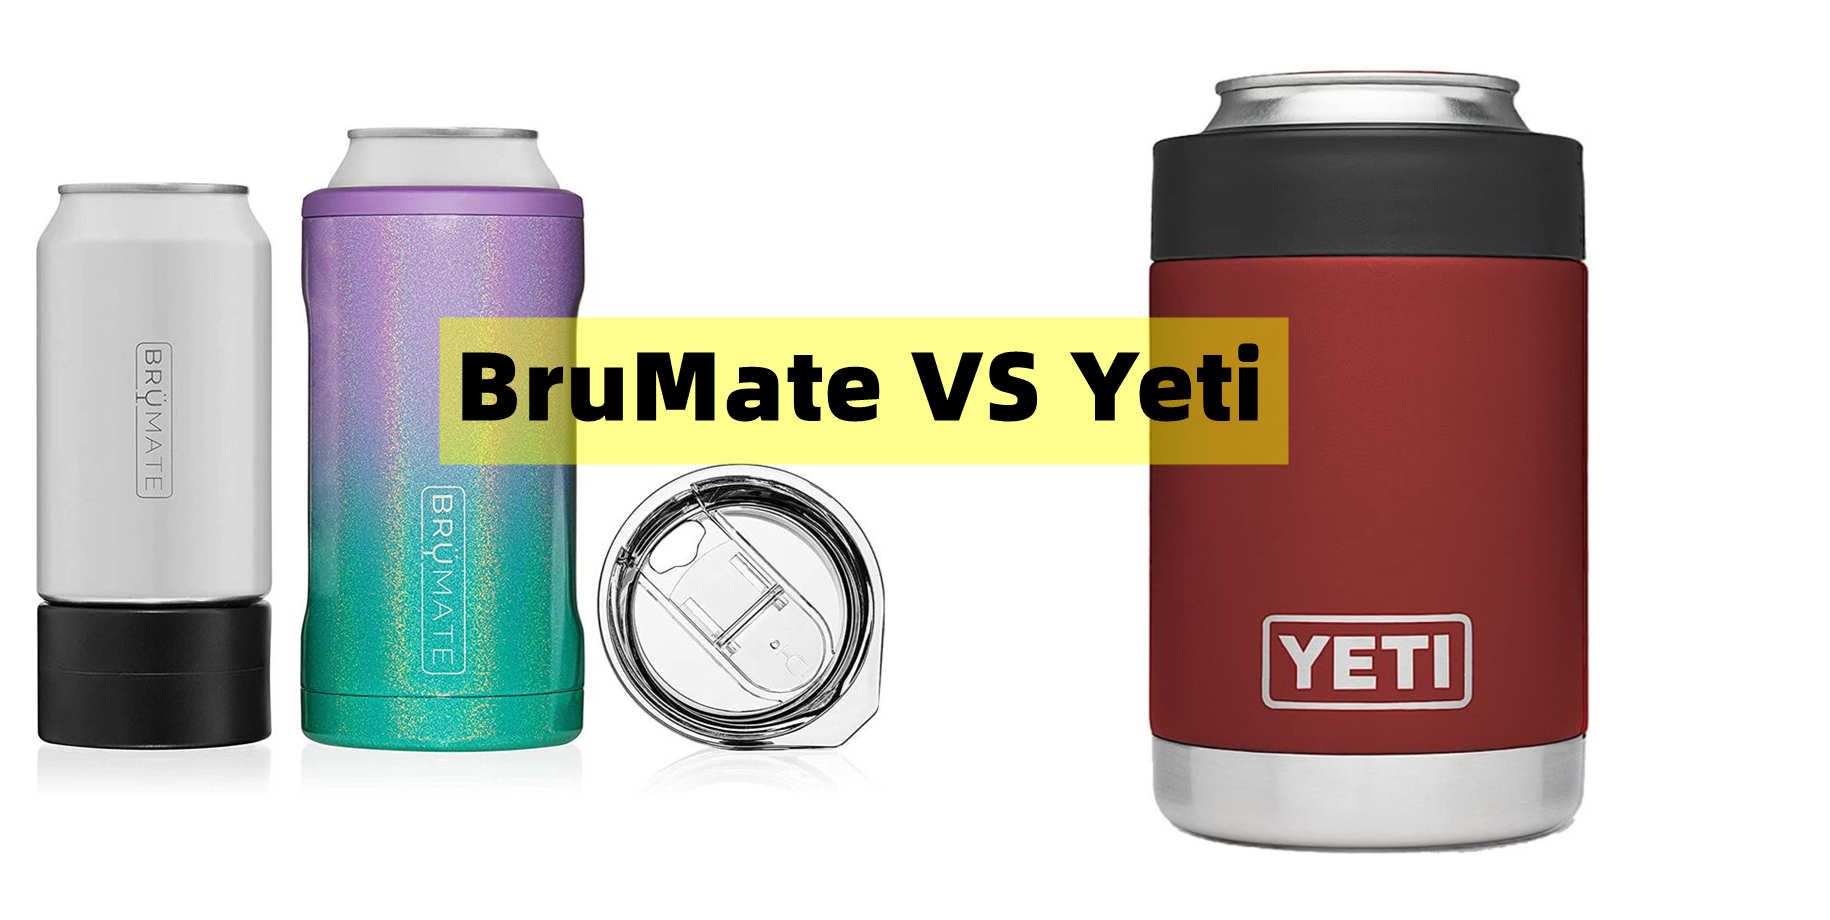 is brumate better than yeti